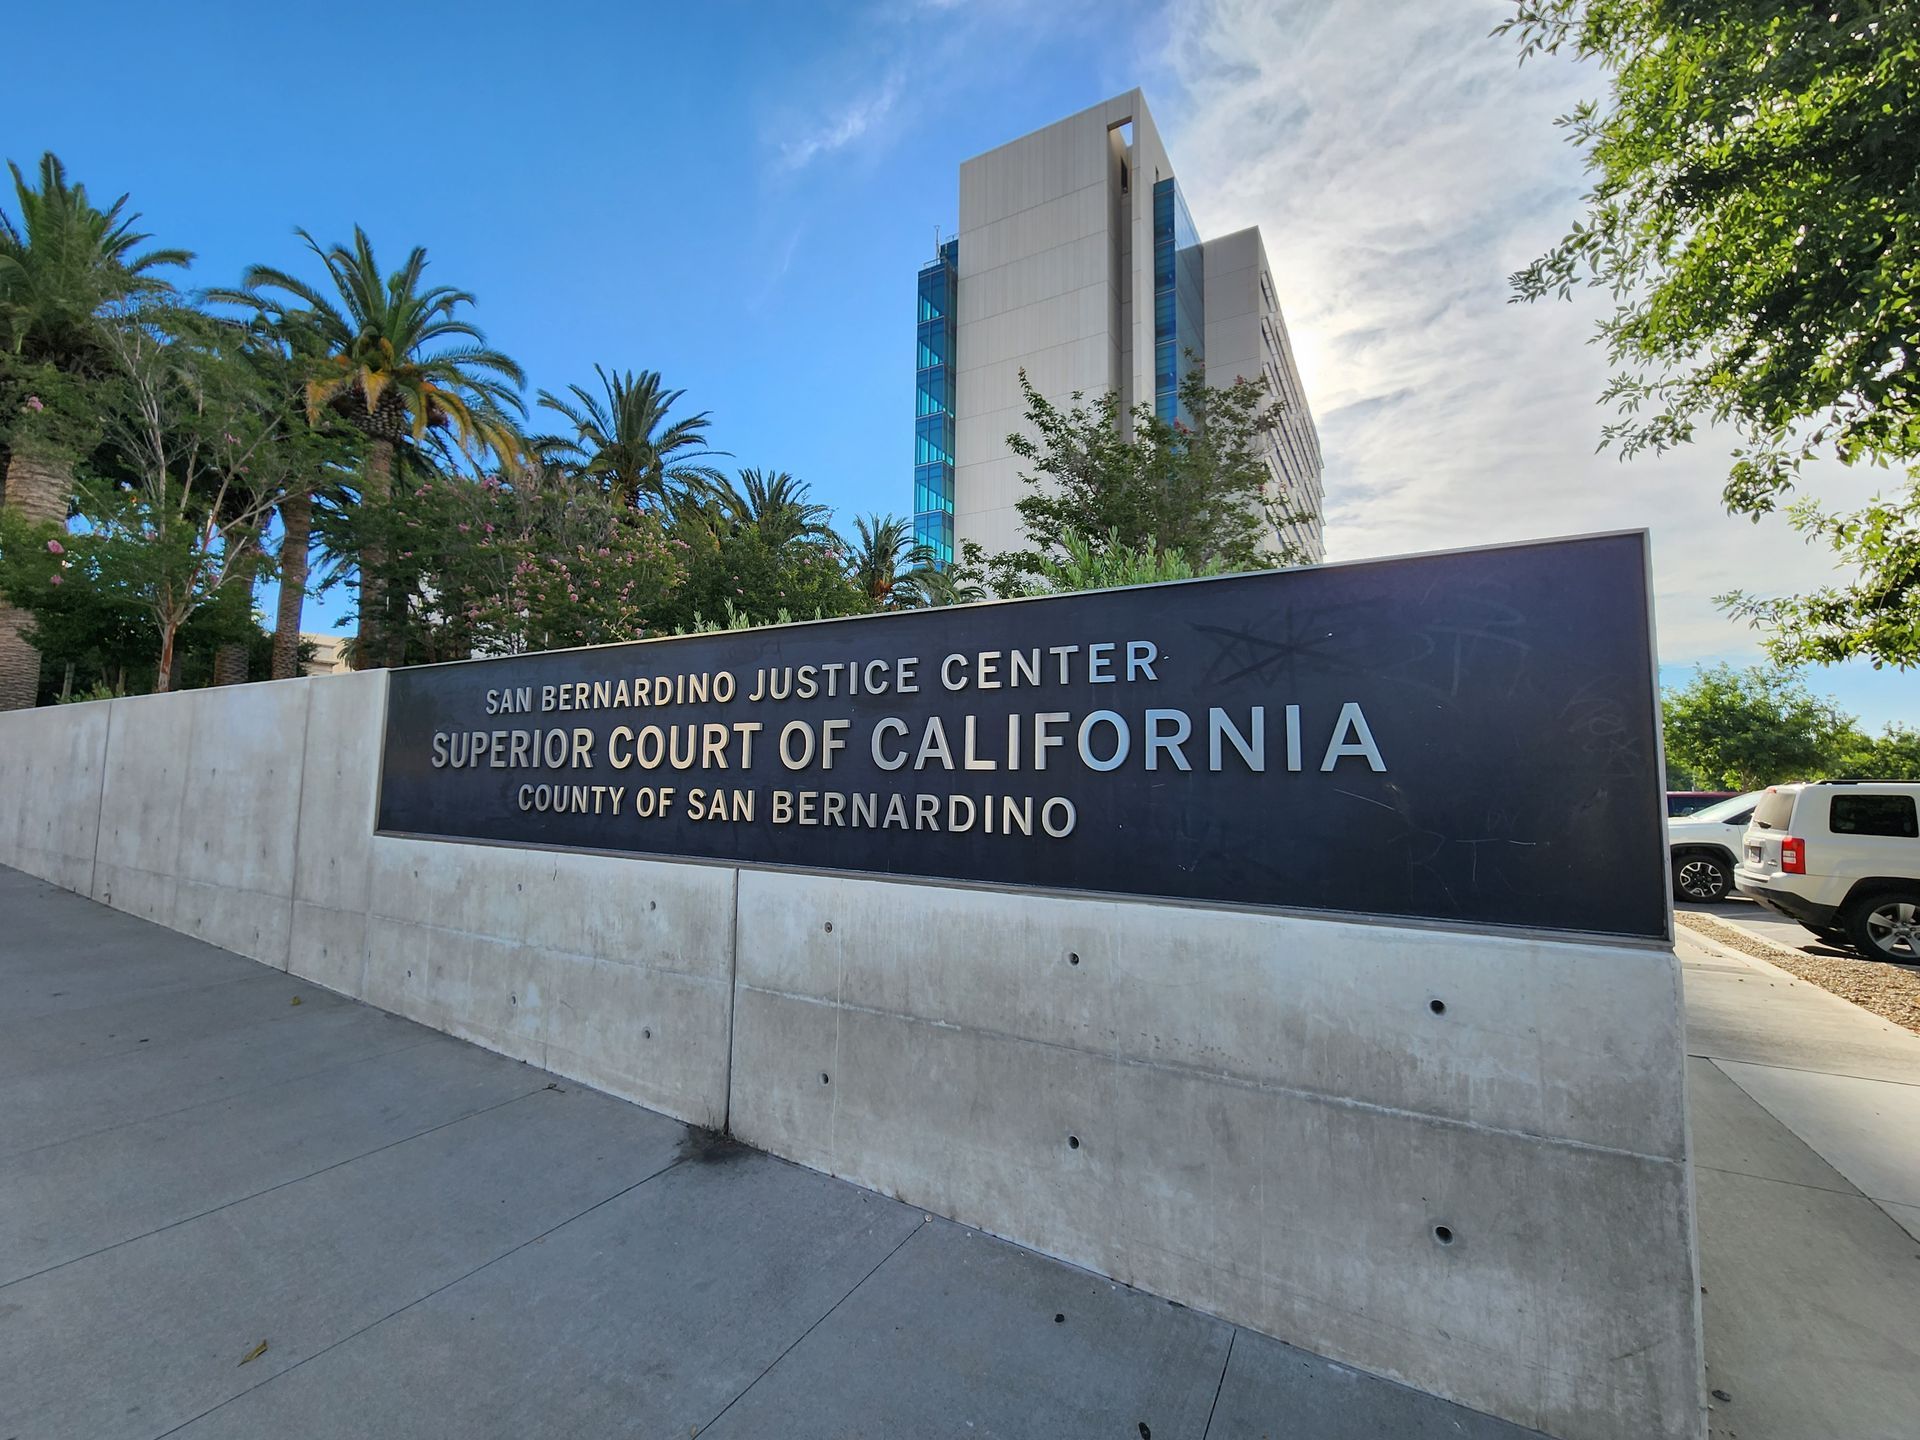 San Bernardino Justice Center Superior Court of California building